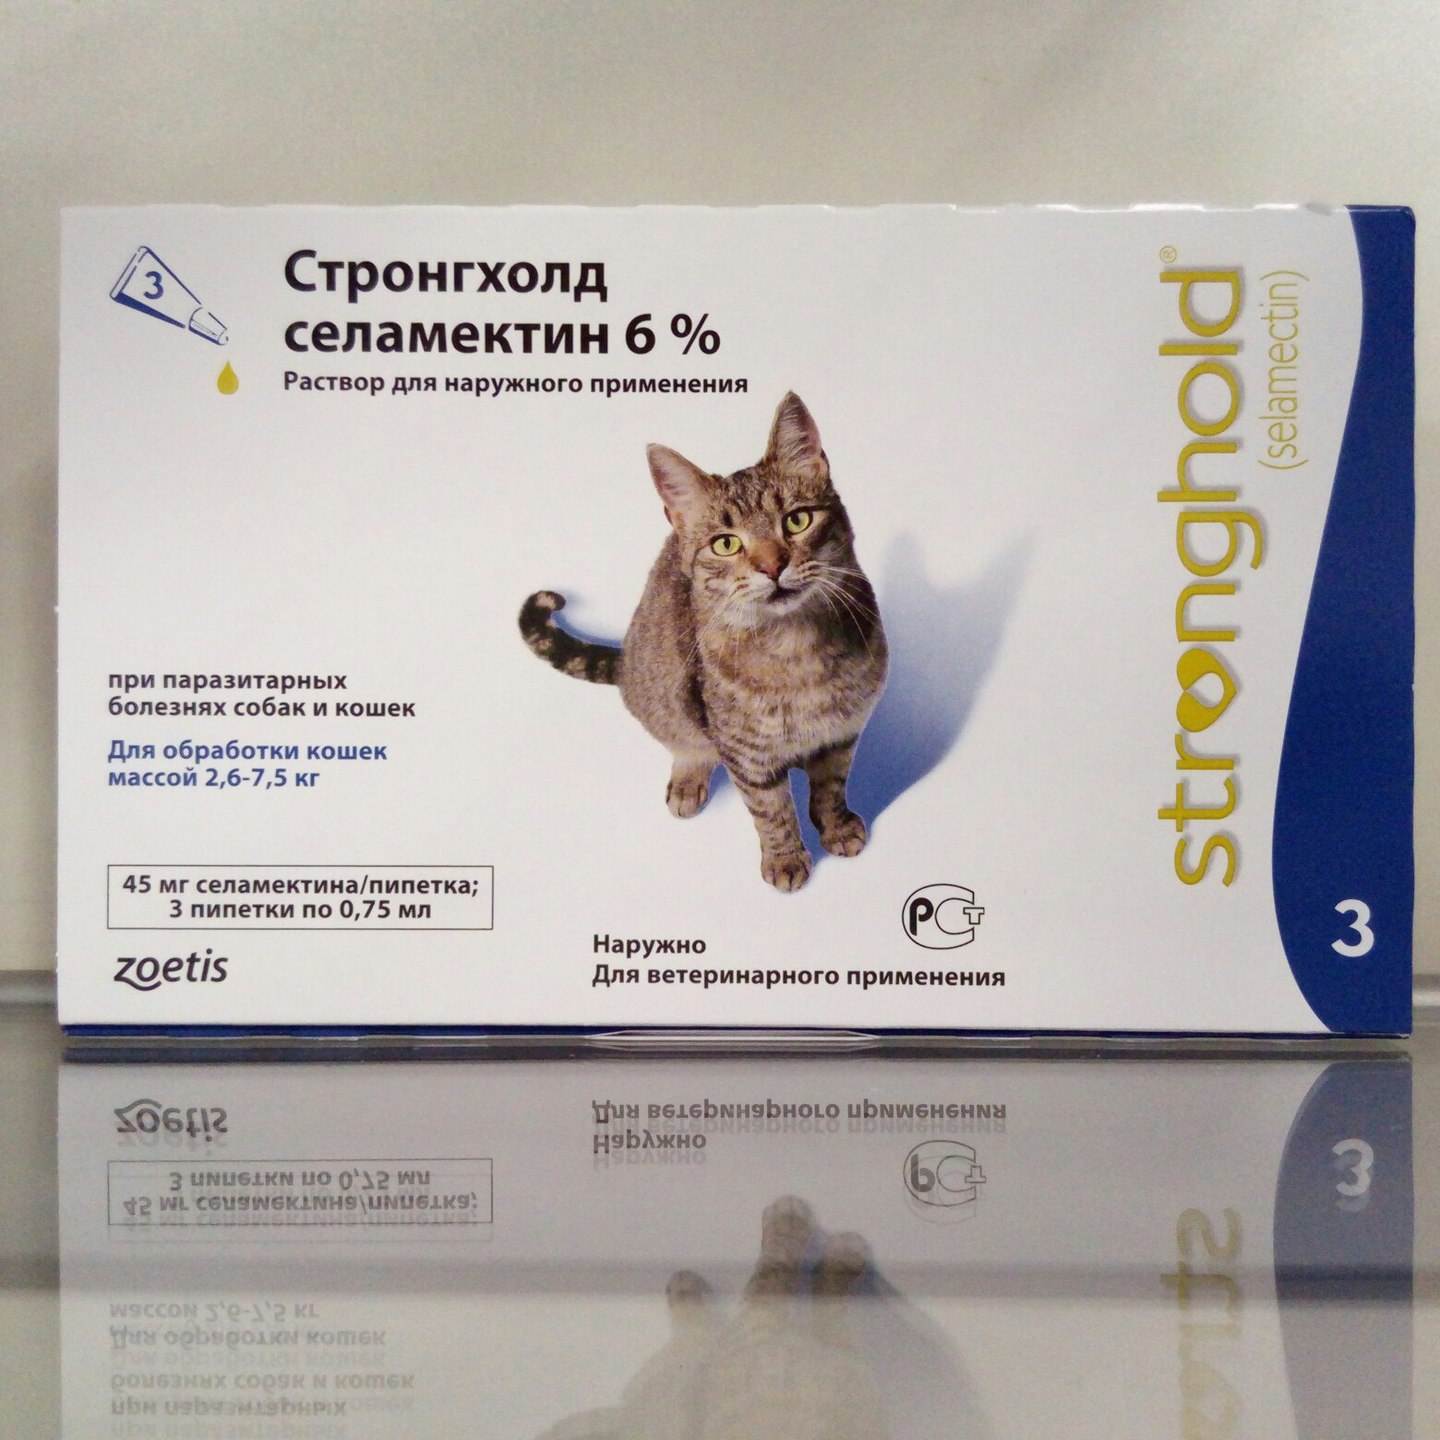 Стронгхолд: назначение препарата, инструкция по применению для кошек и противопоказания